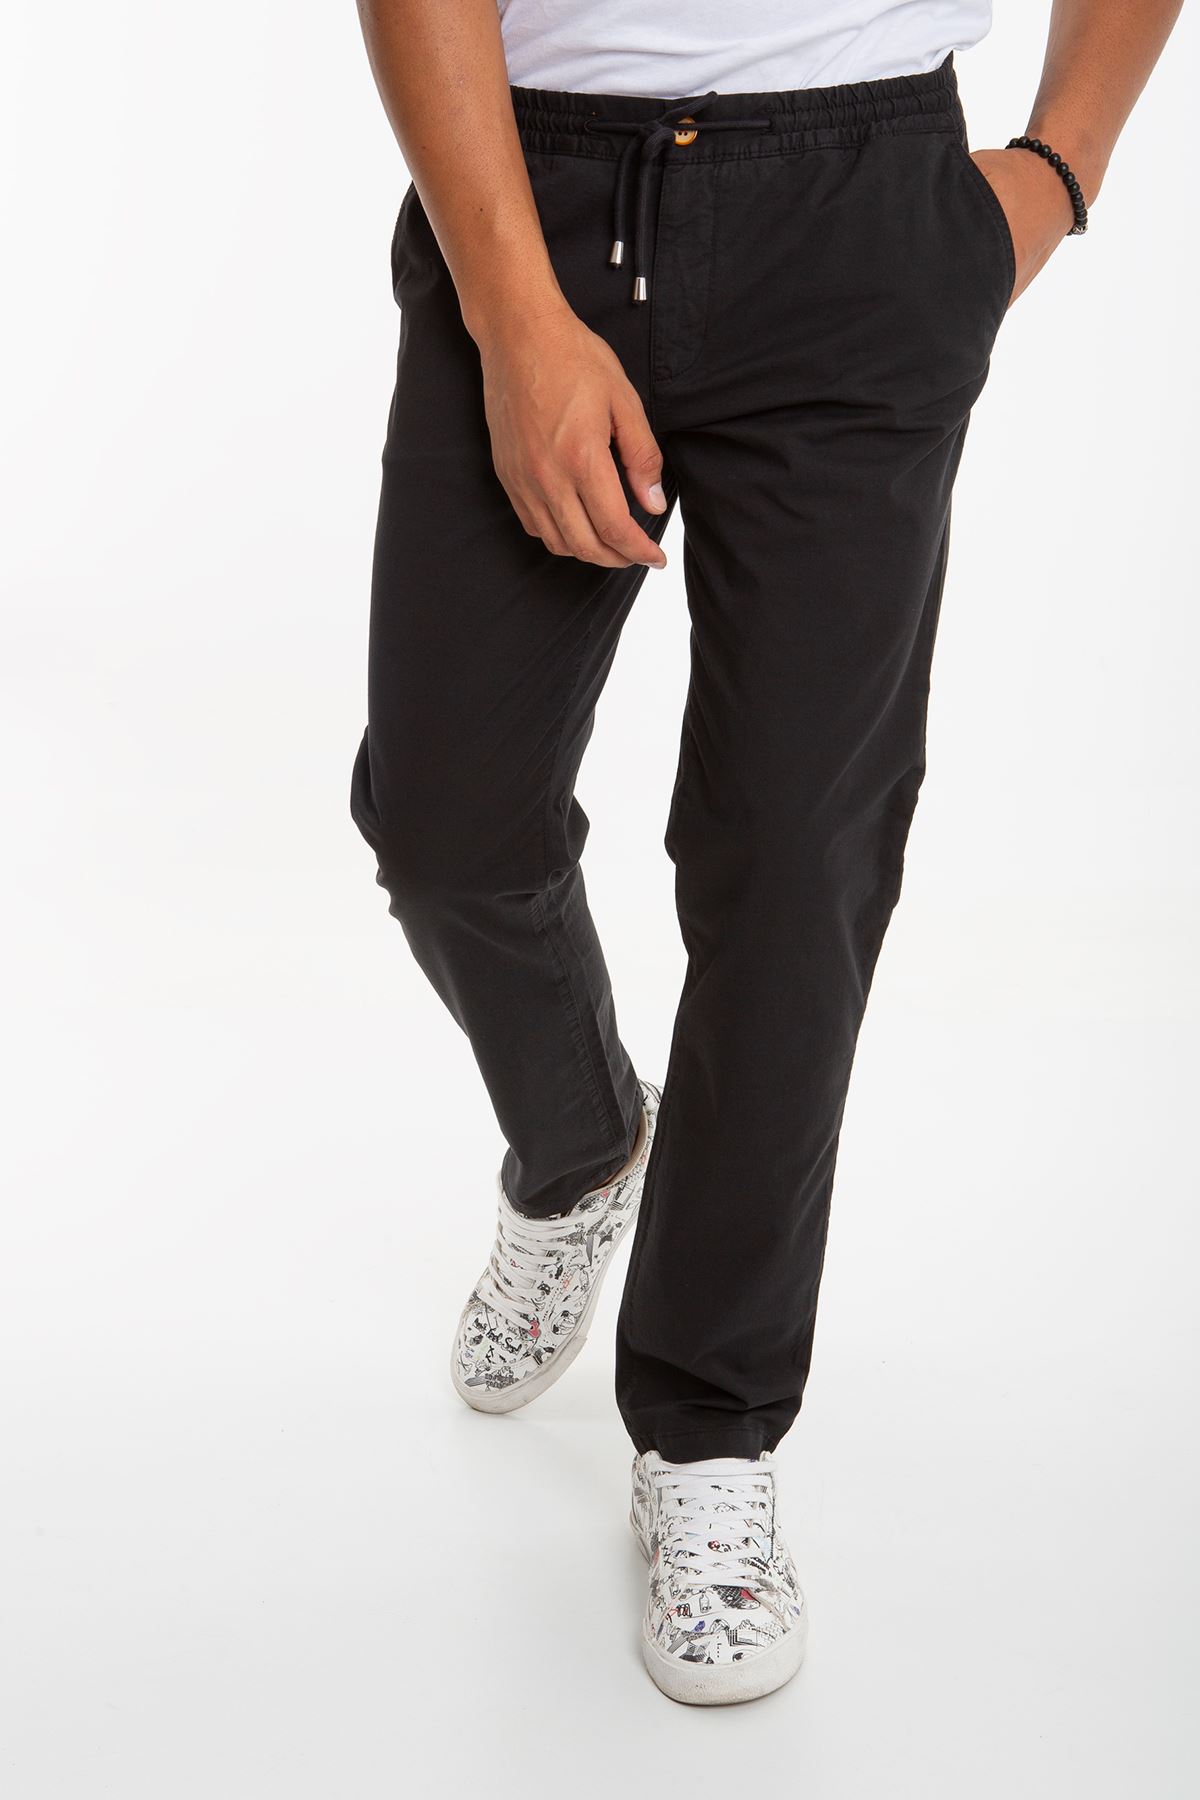 Fitz Roy Erkek Siyah Beli Lastikli İp Bağlamalı Modern Fit Pantolon Mirror 